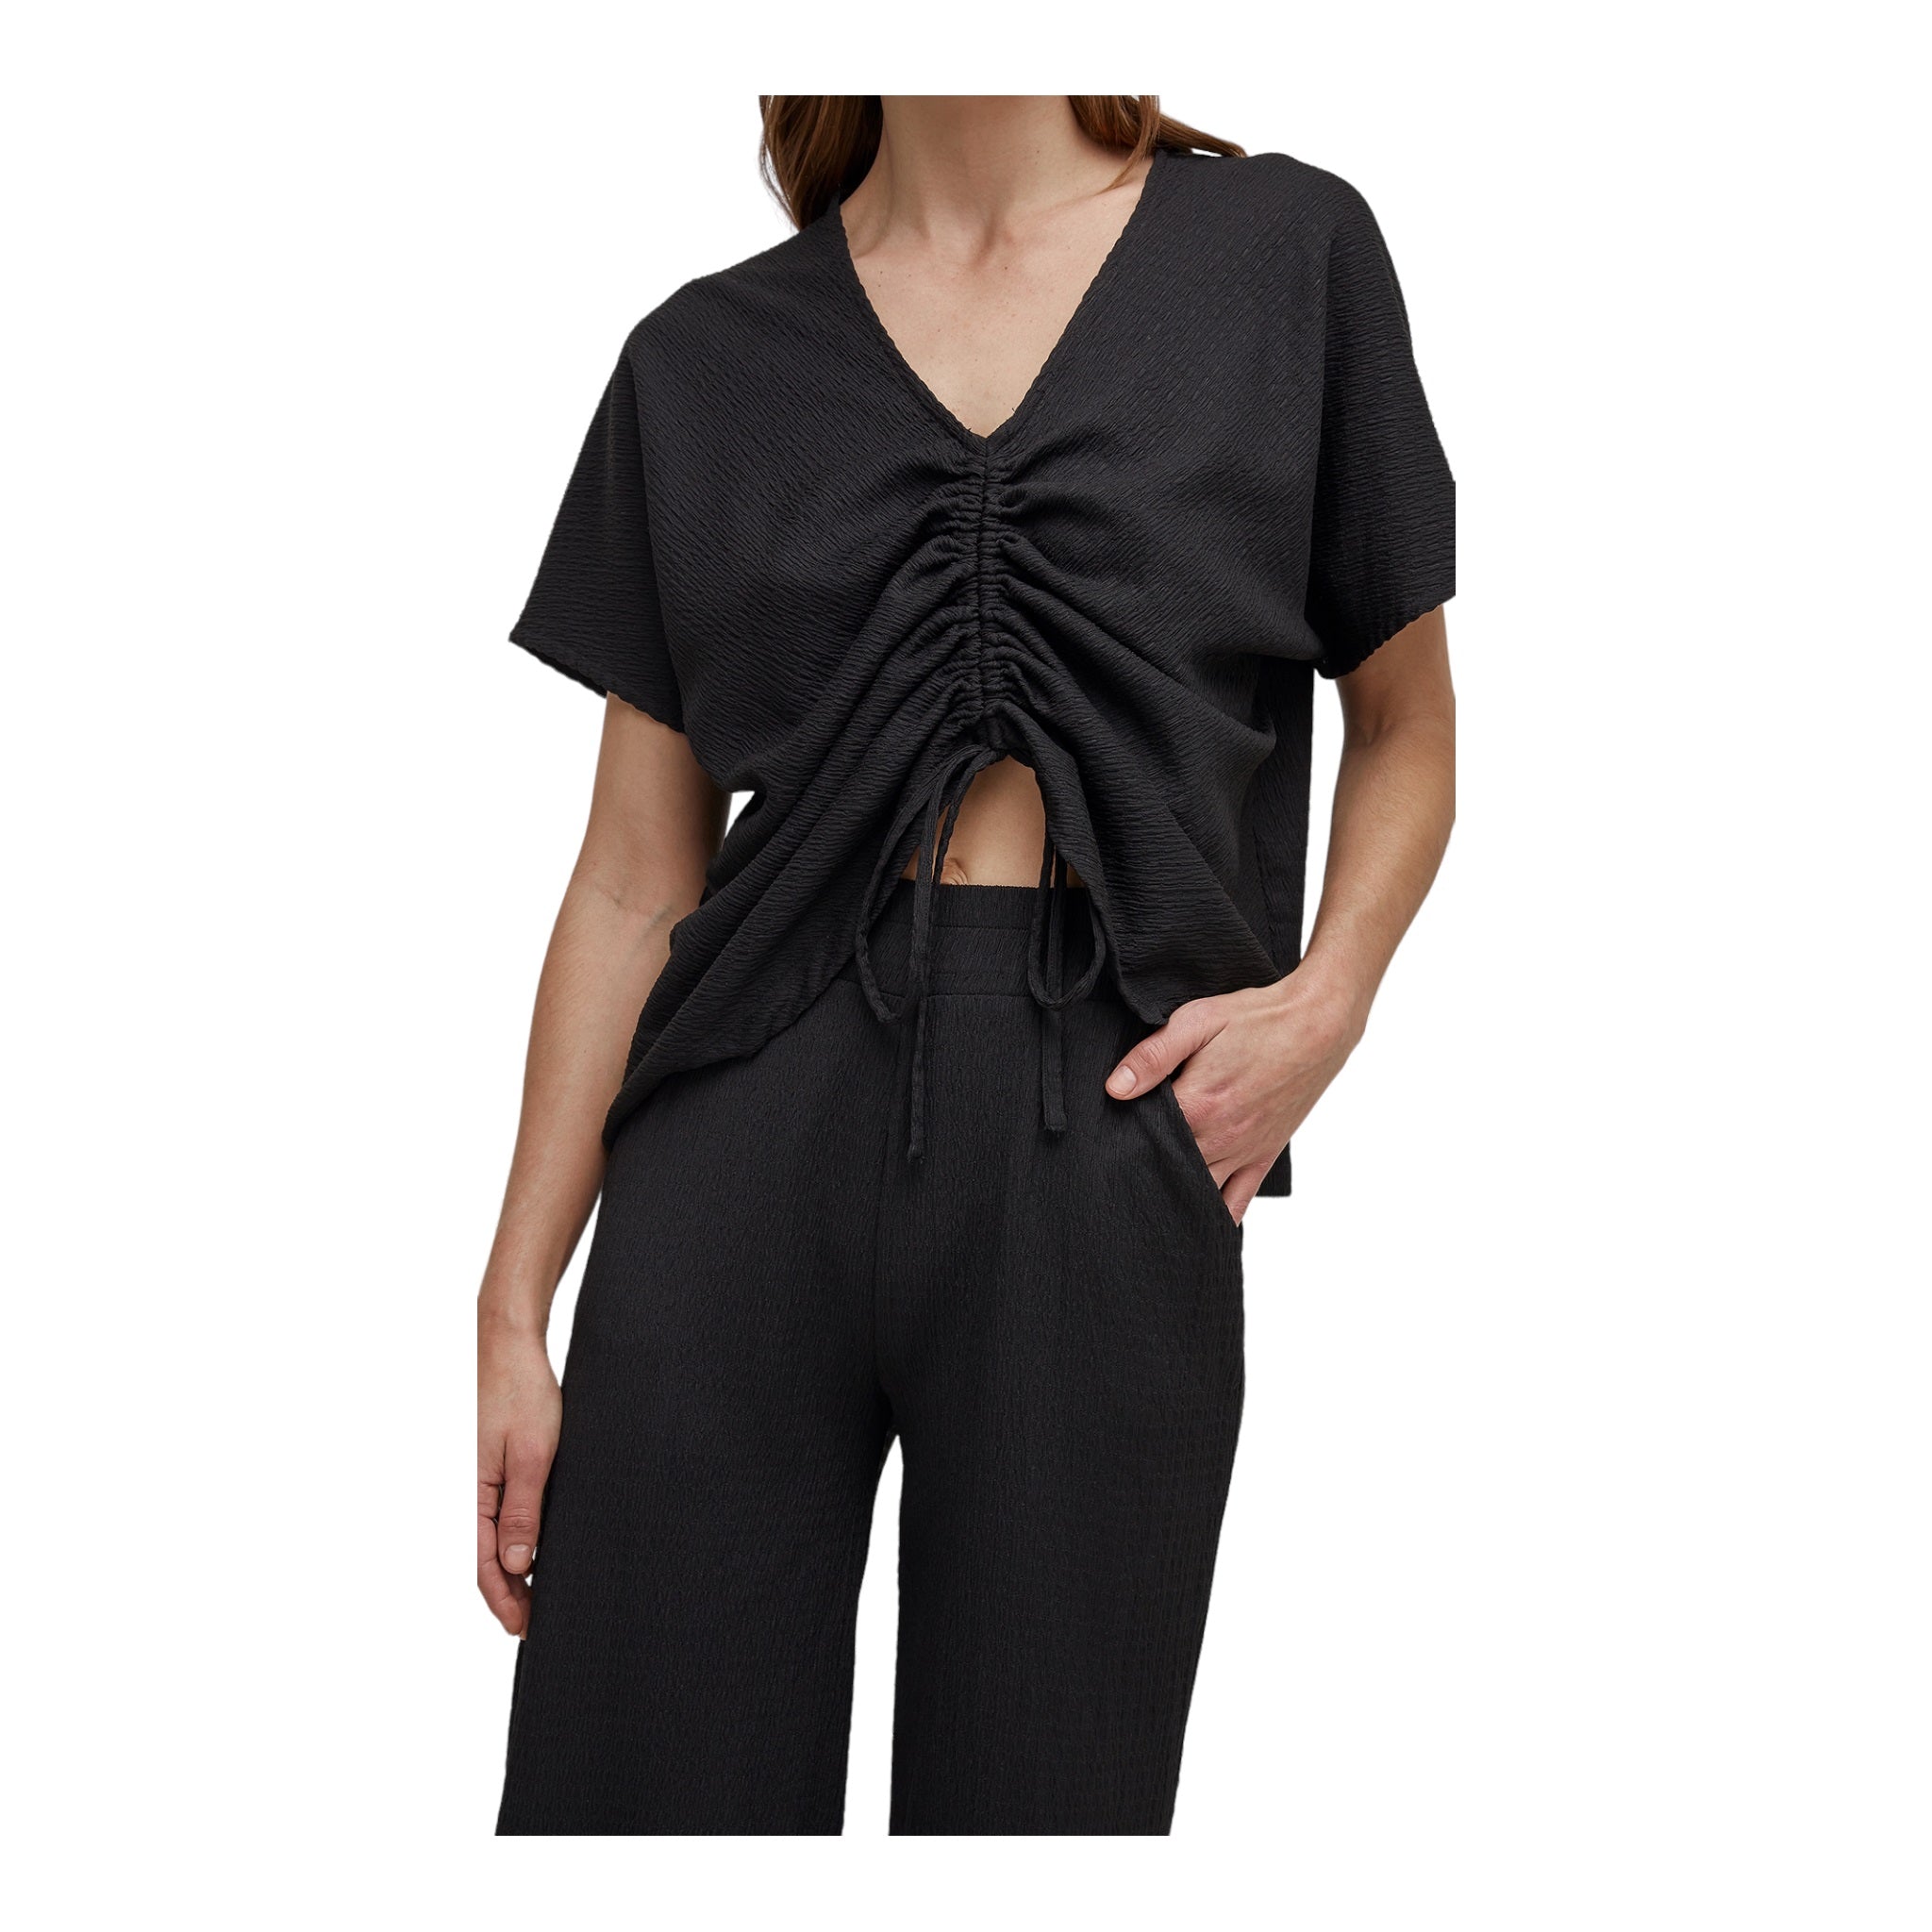 UCHUU Short Sleeve Top with Front Drawstring Black